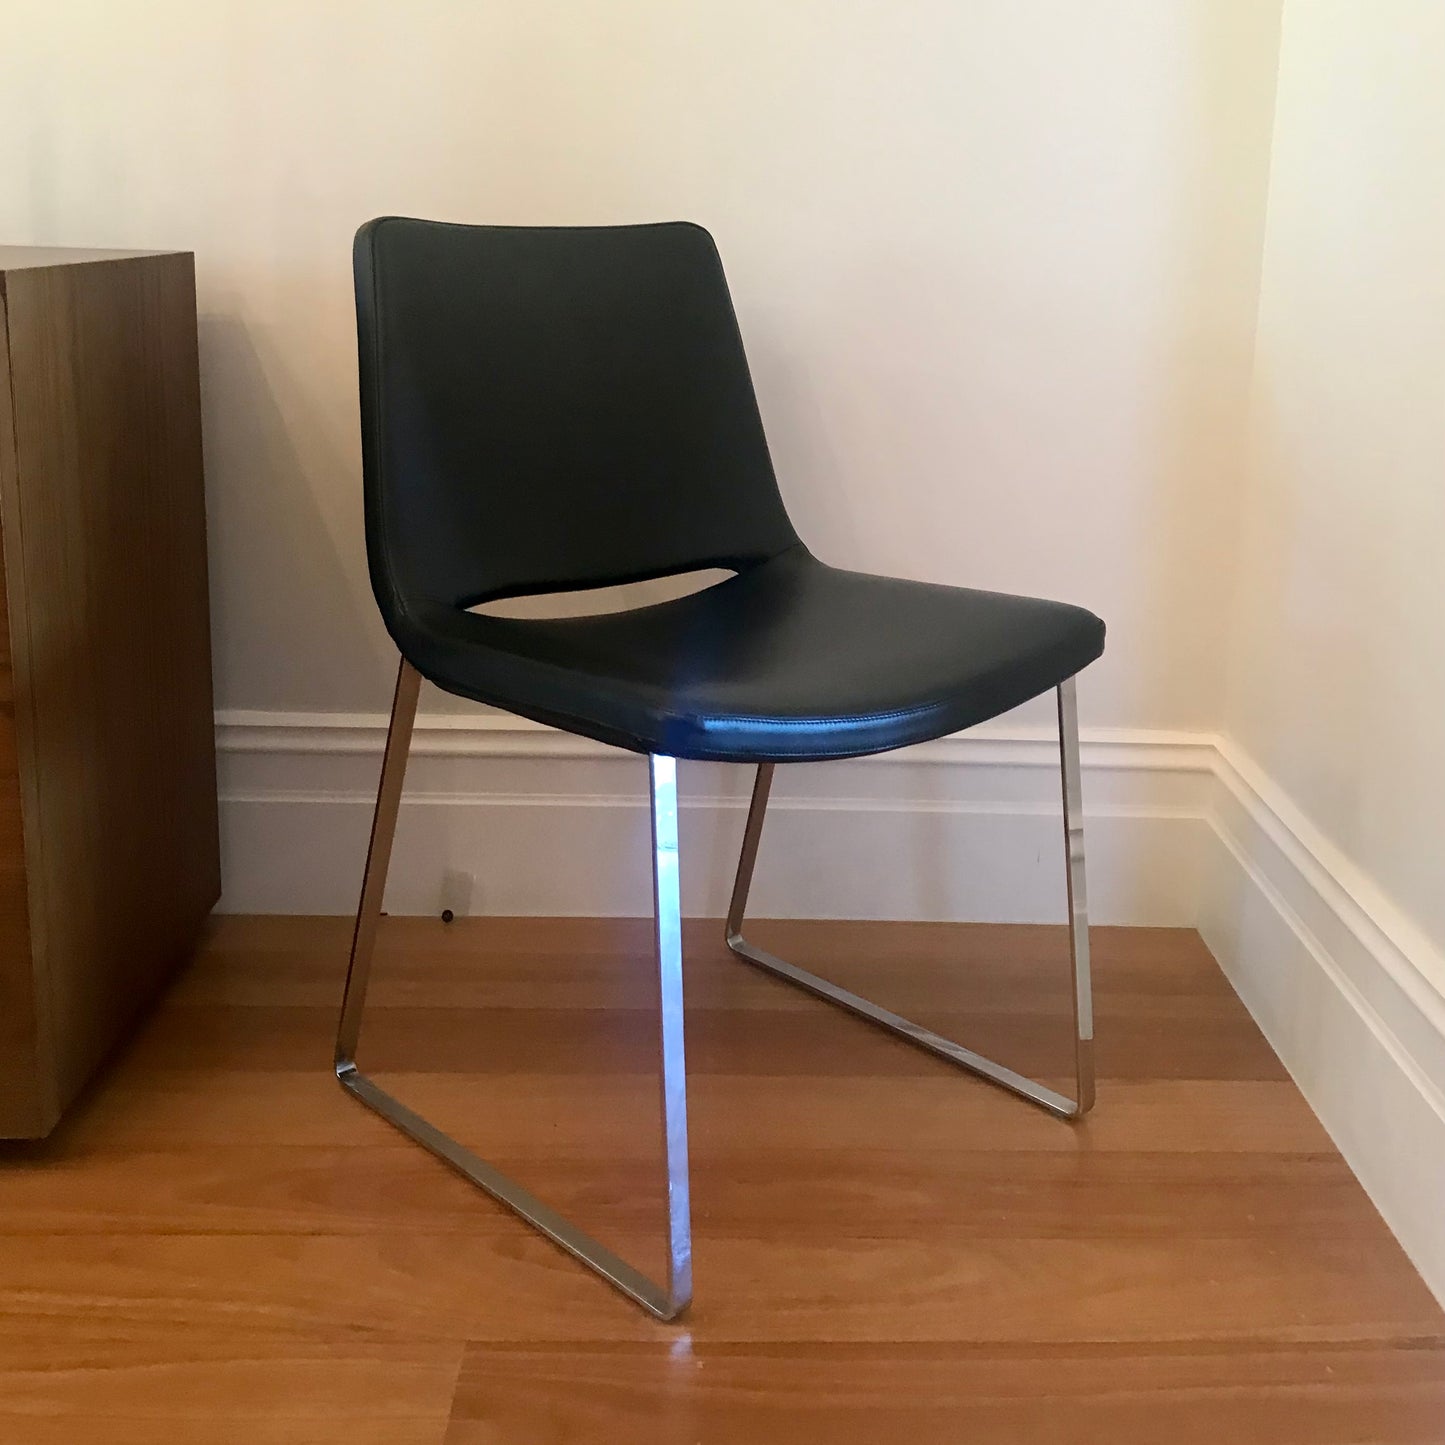 Set of FOUR Metropolitan Chairs by Jeffrey Bernett for B&B Italia